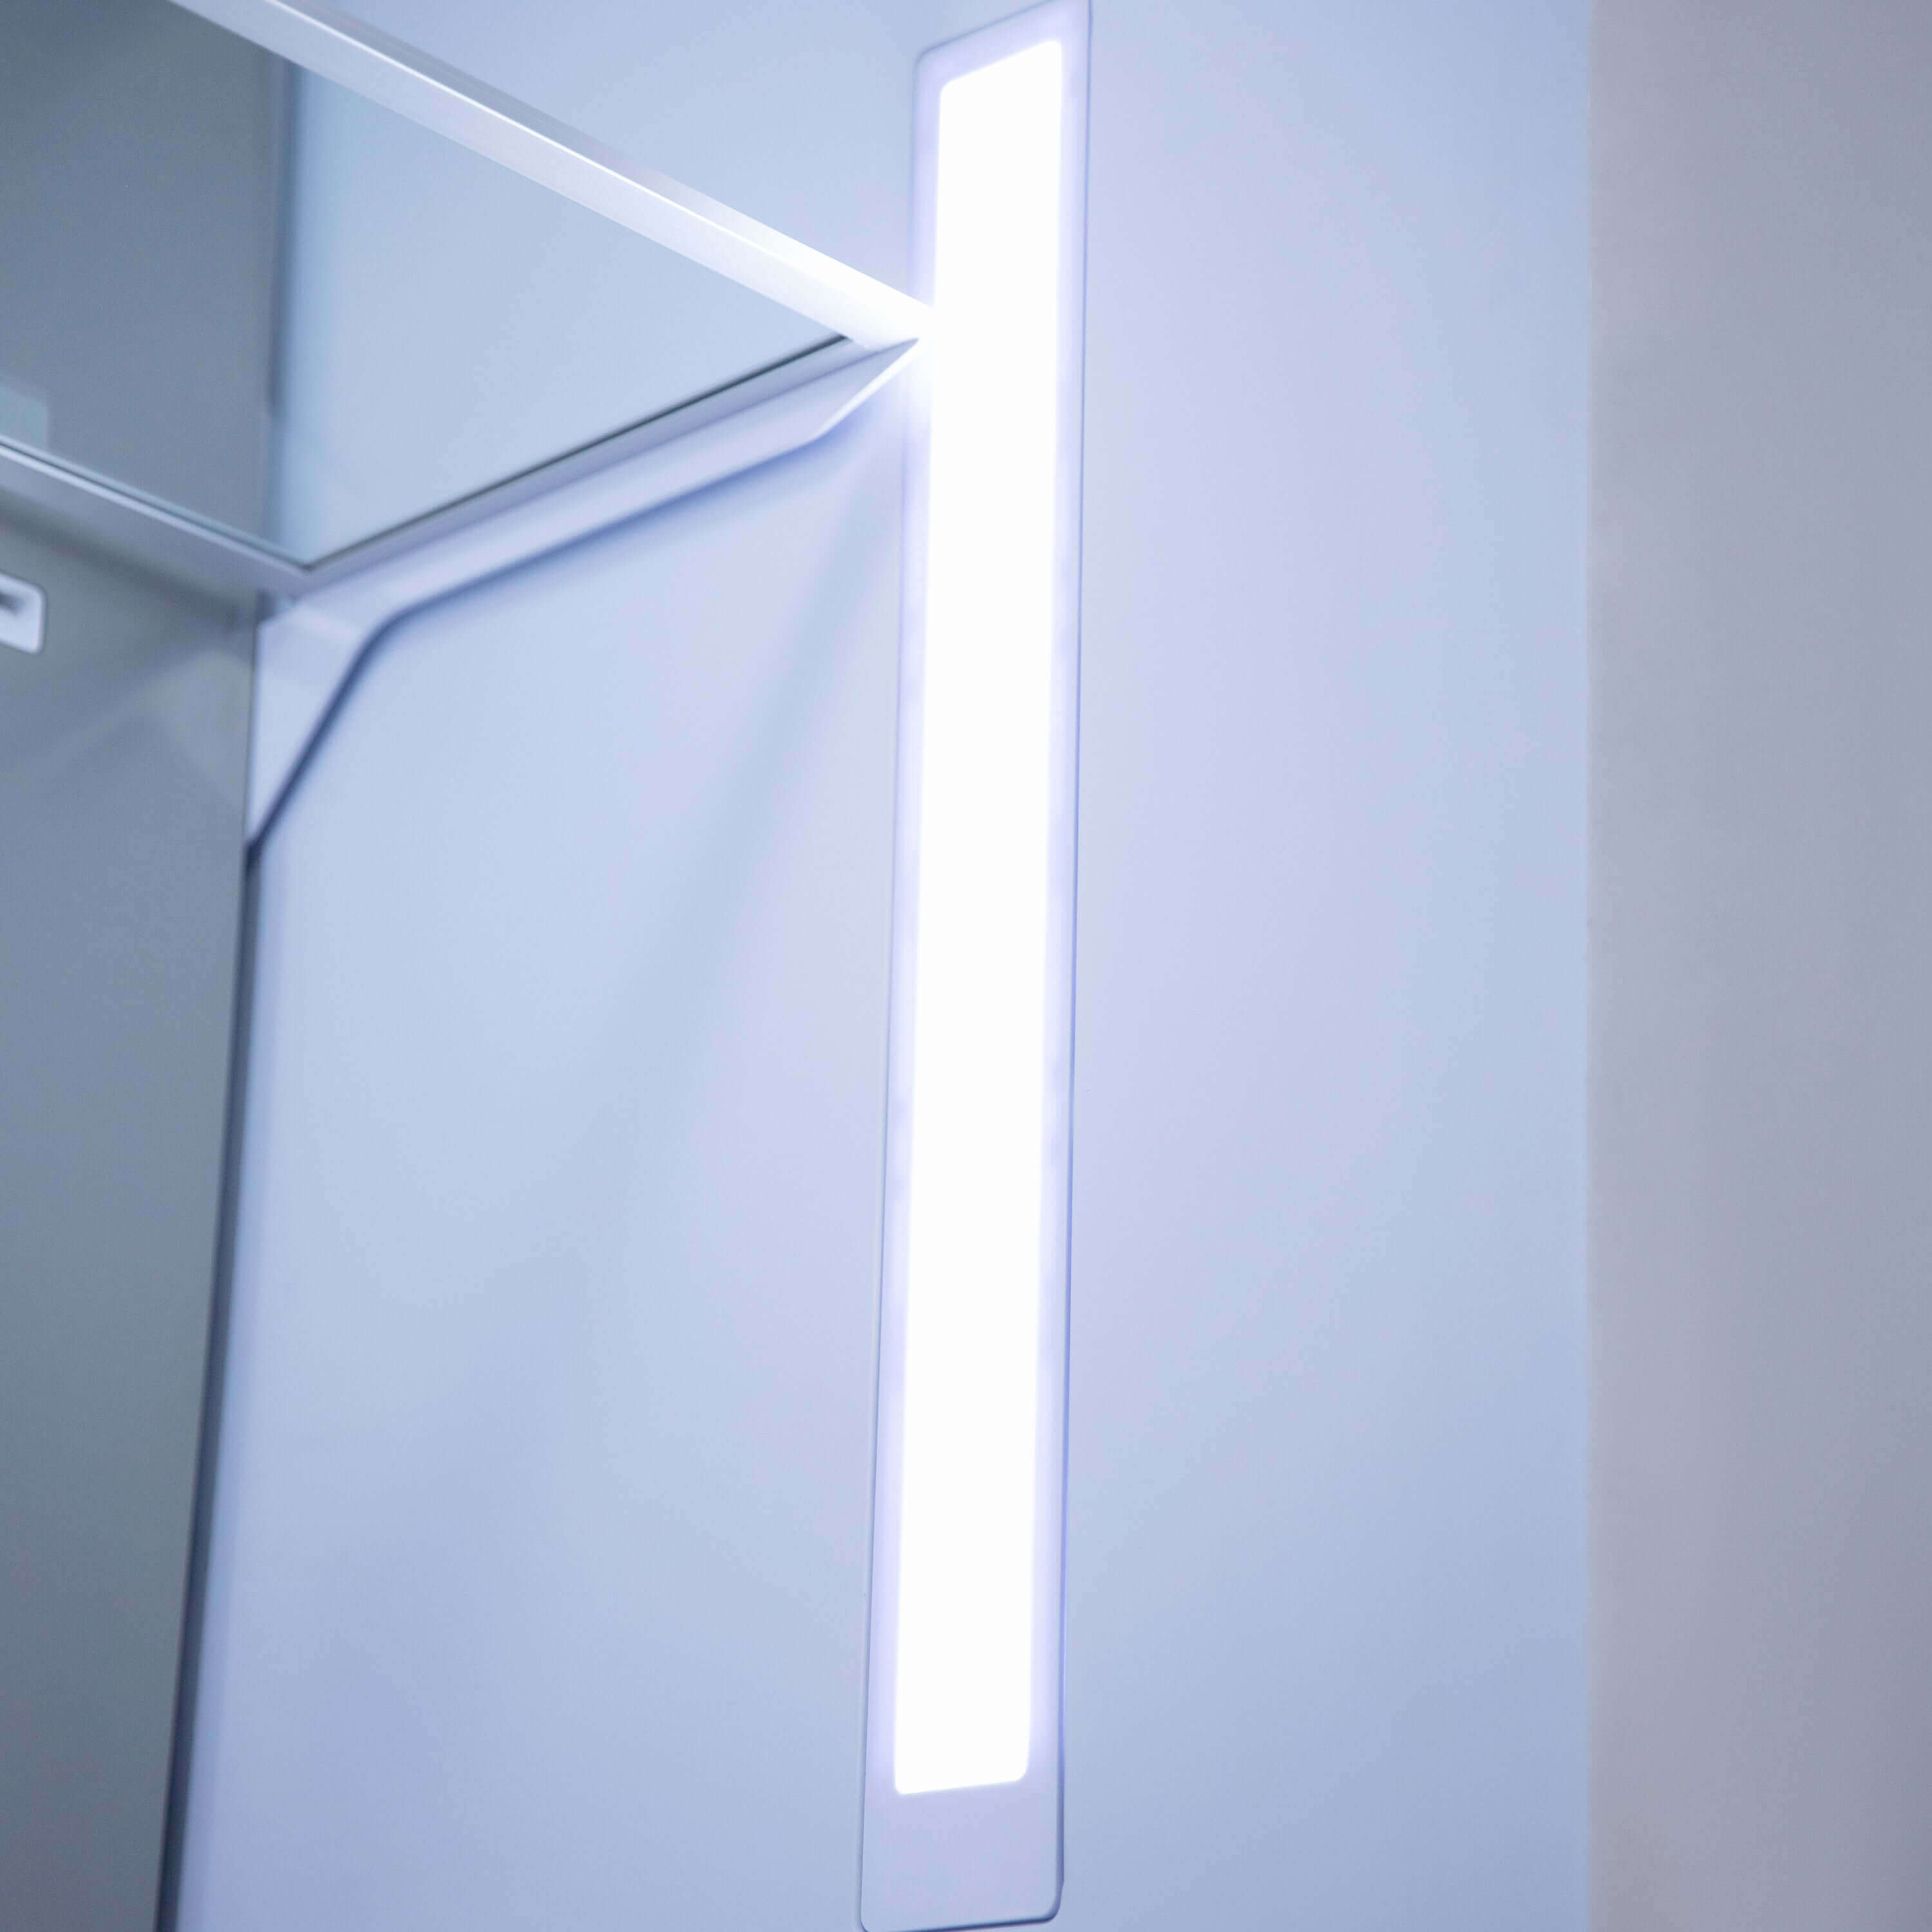 Built-in LED Lighting Illuminates Refrigerator and Freezer Spaces